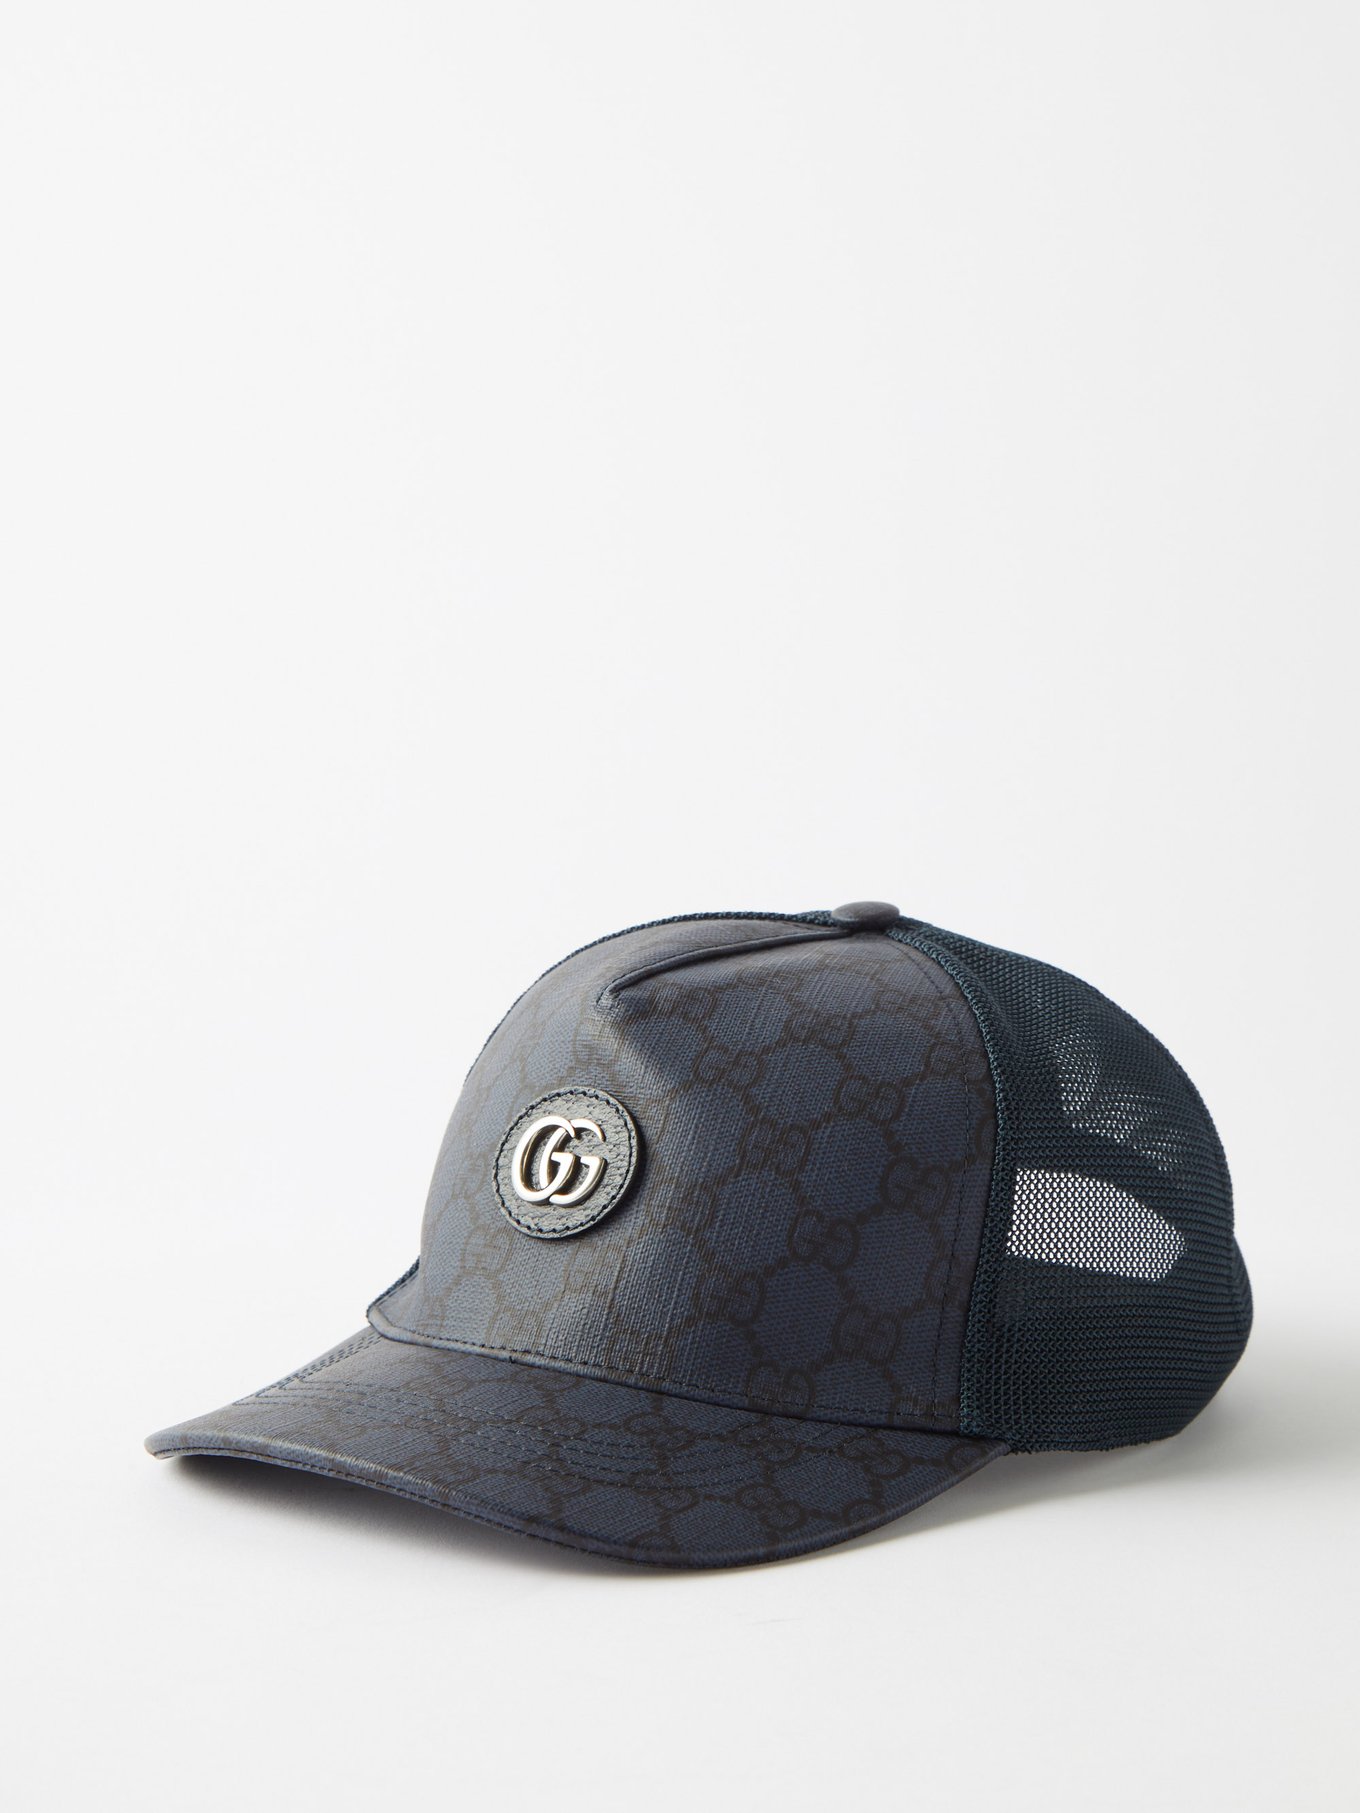 Blue GG Supreme canvas baseball cap, Gucci